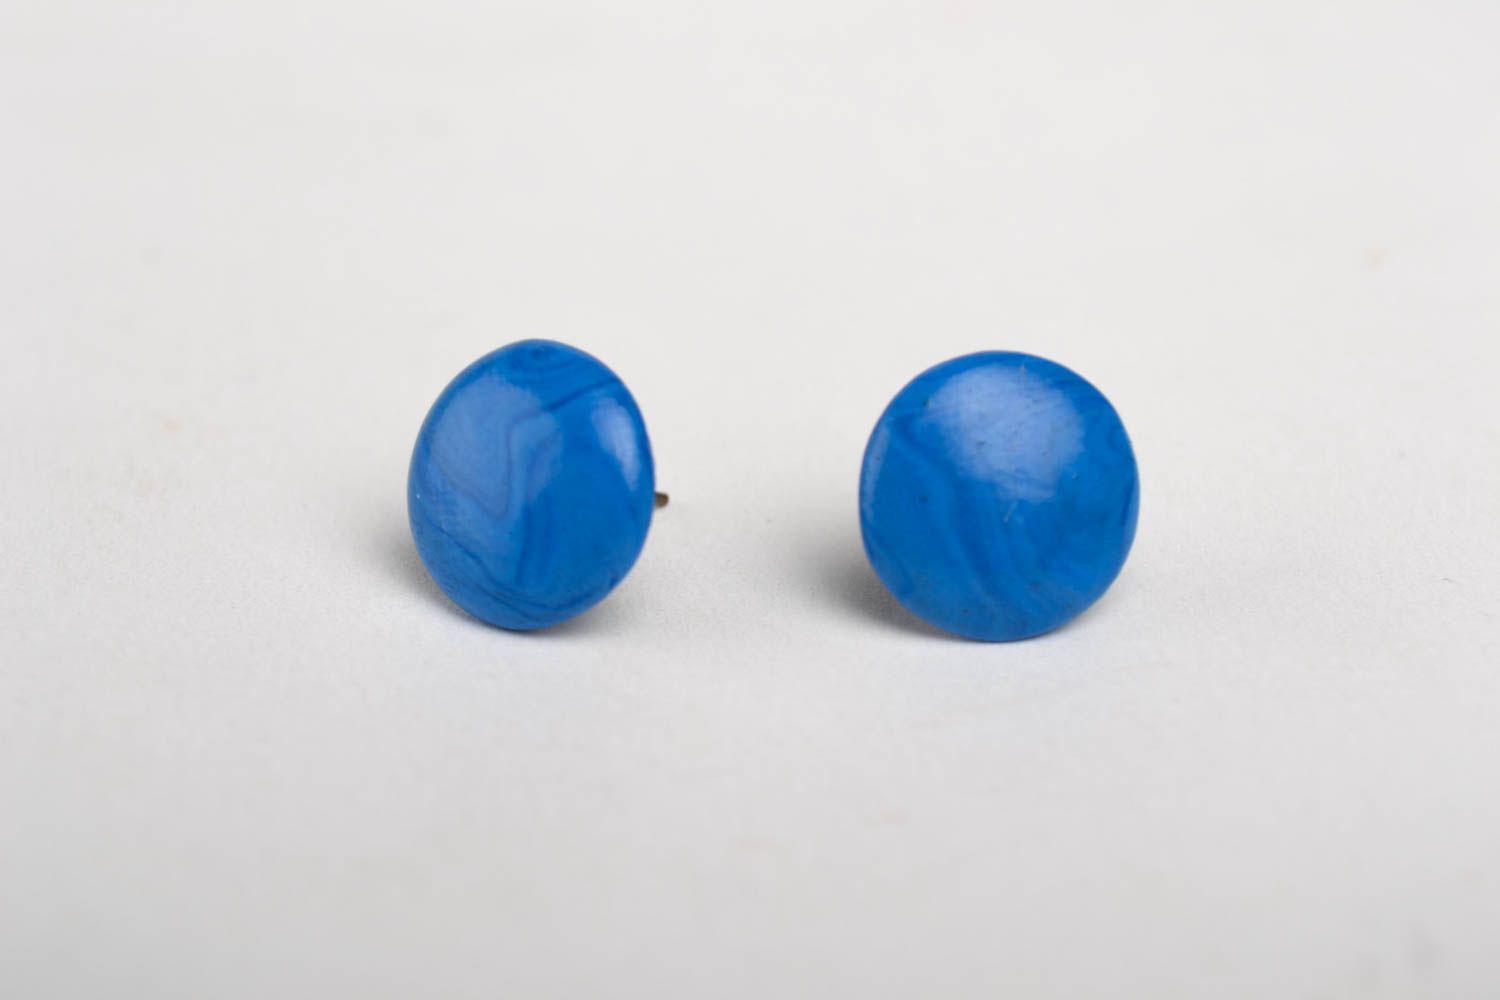 Handmade stylish blue earrings cute stud earrings elegant accessory gift photo 2